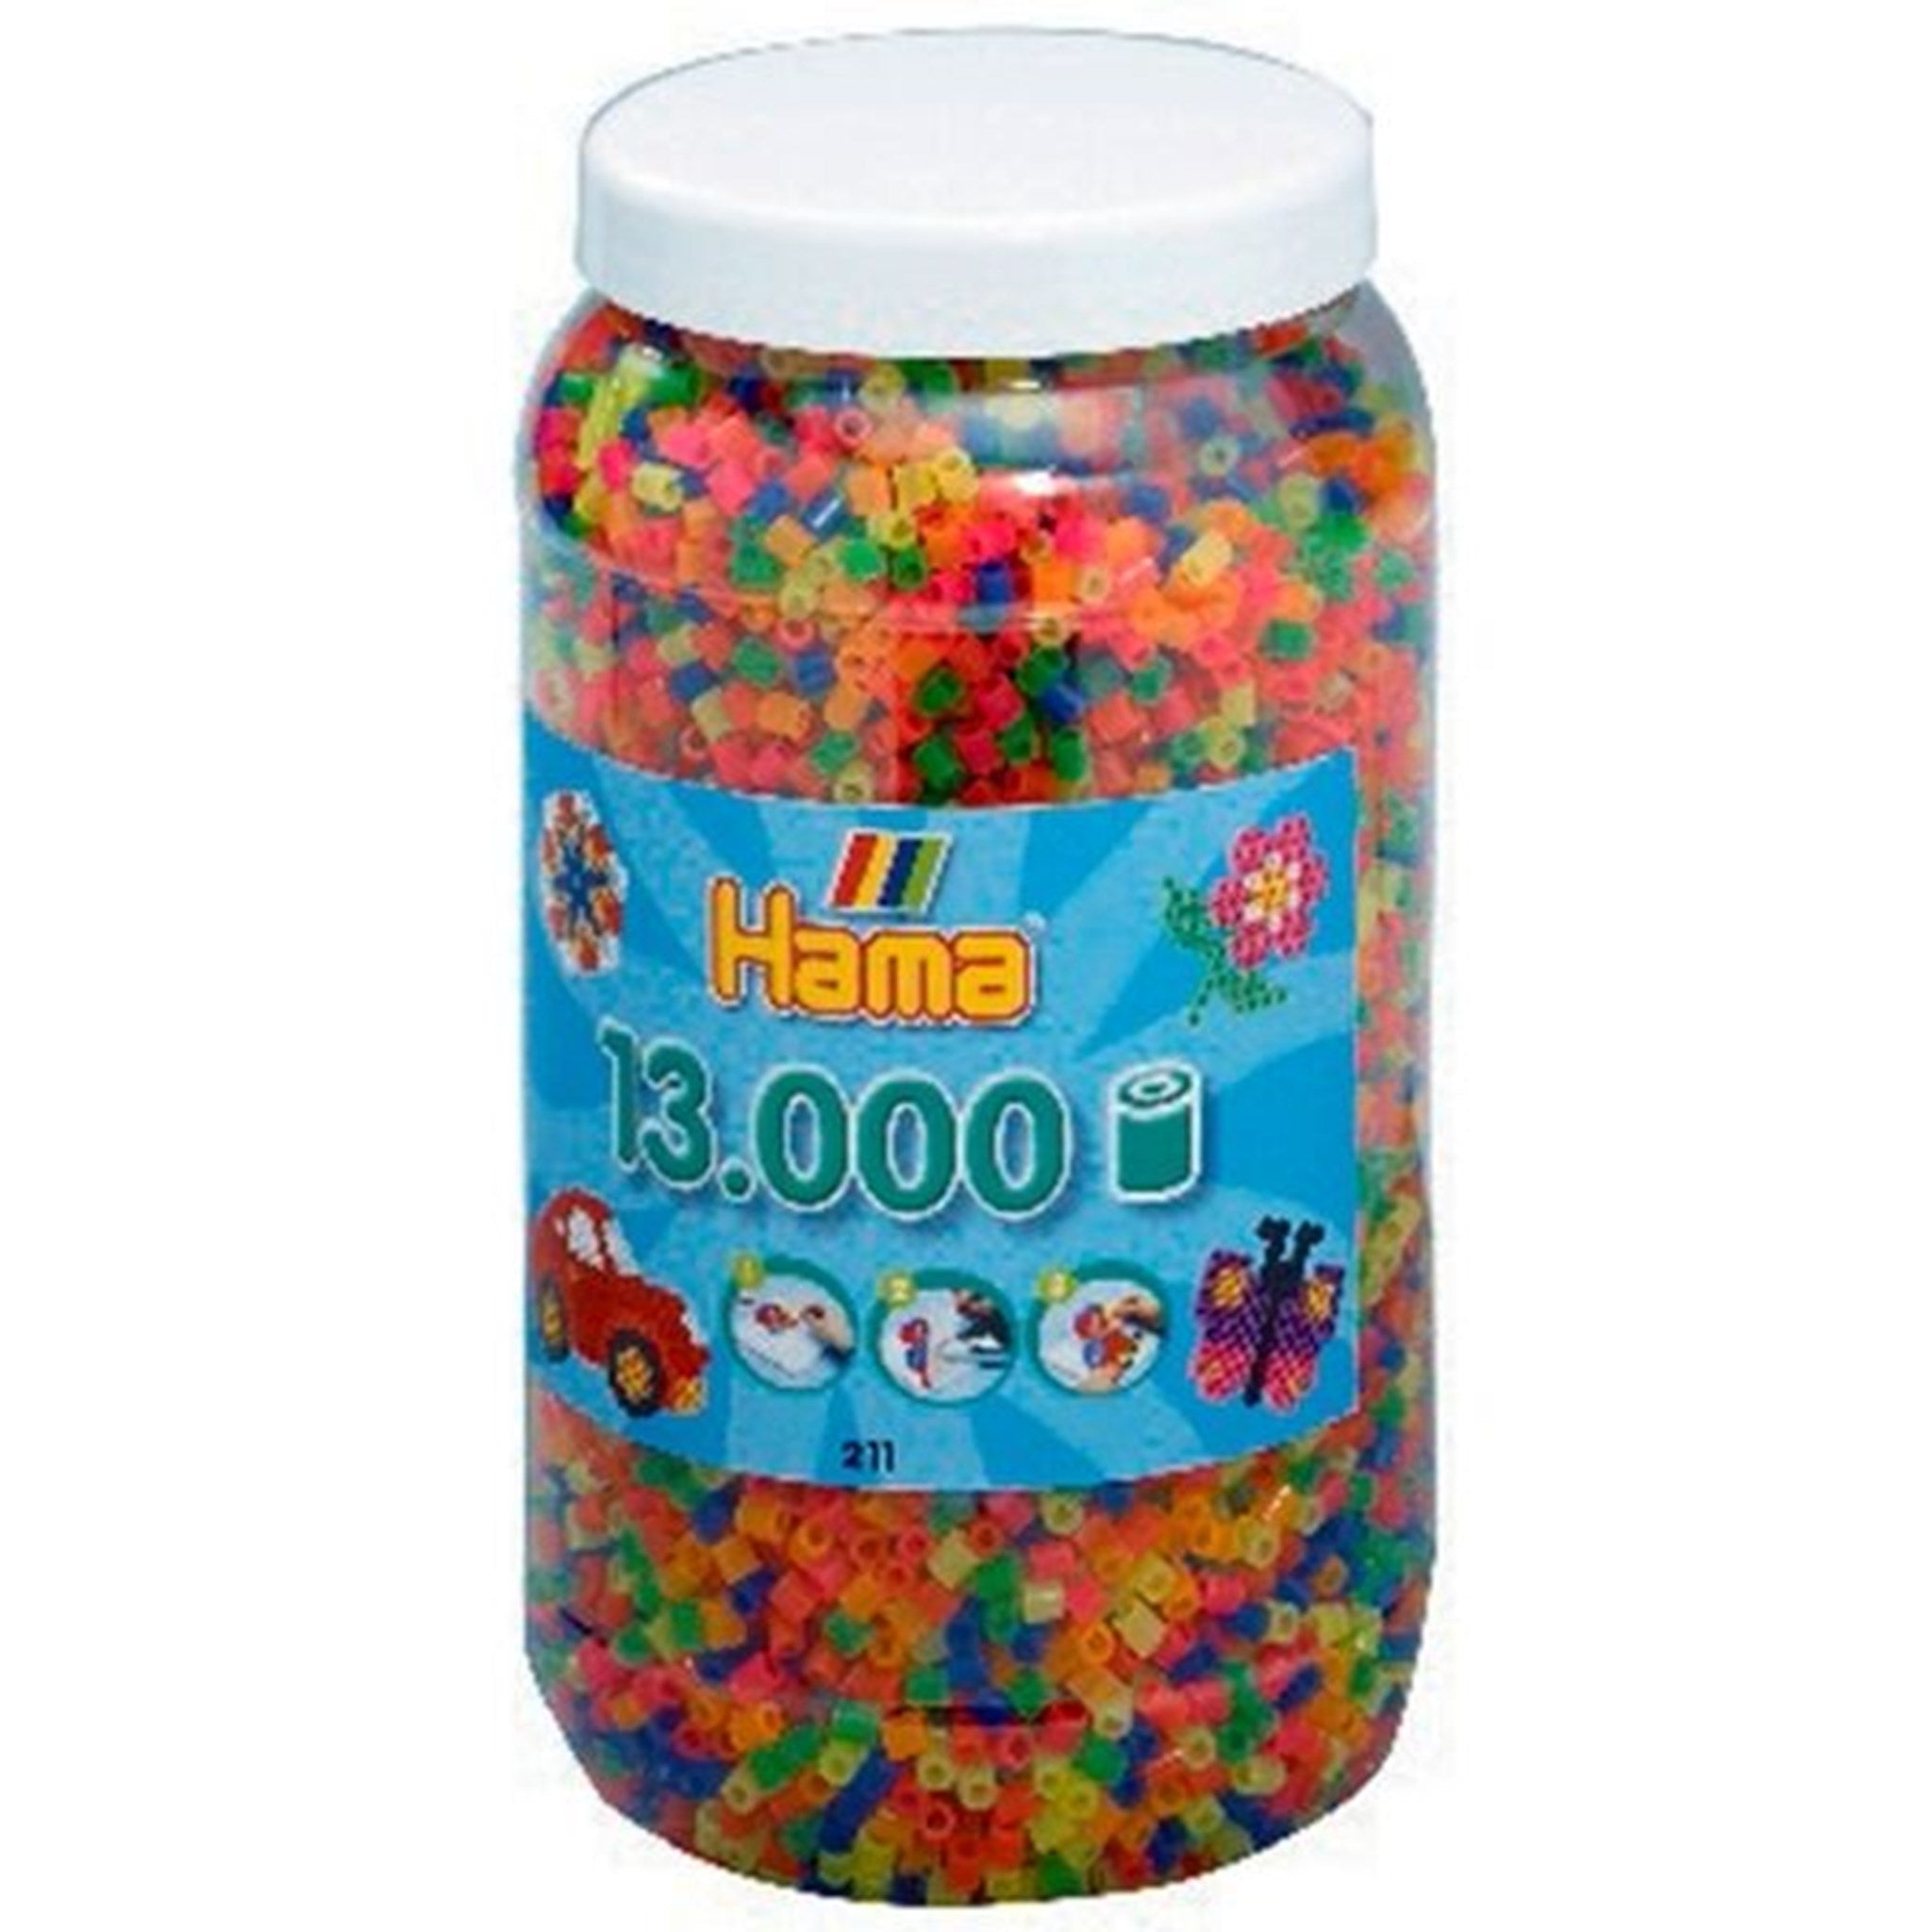 HAMA Midi Pearls 13.000 pcs Neon Mix